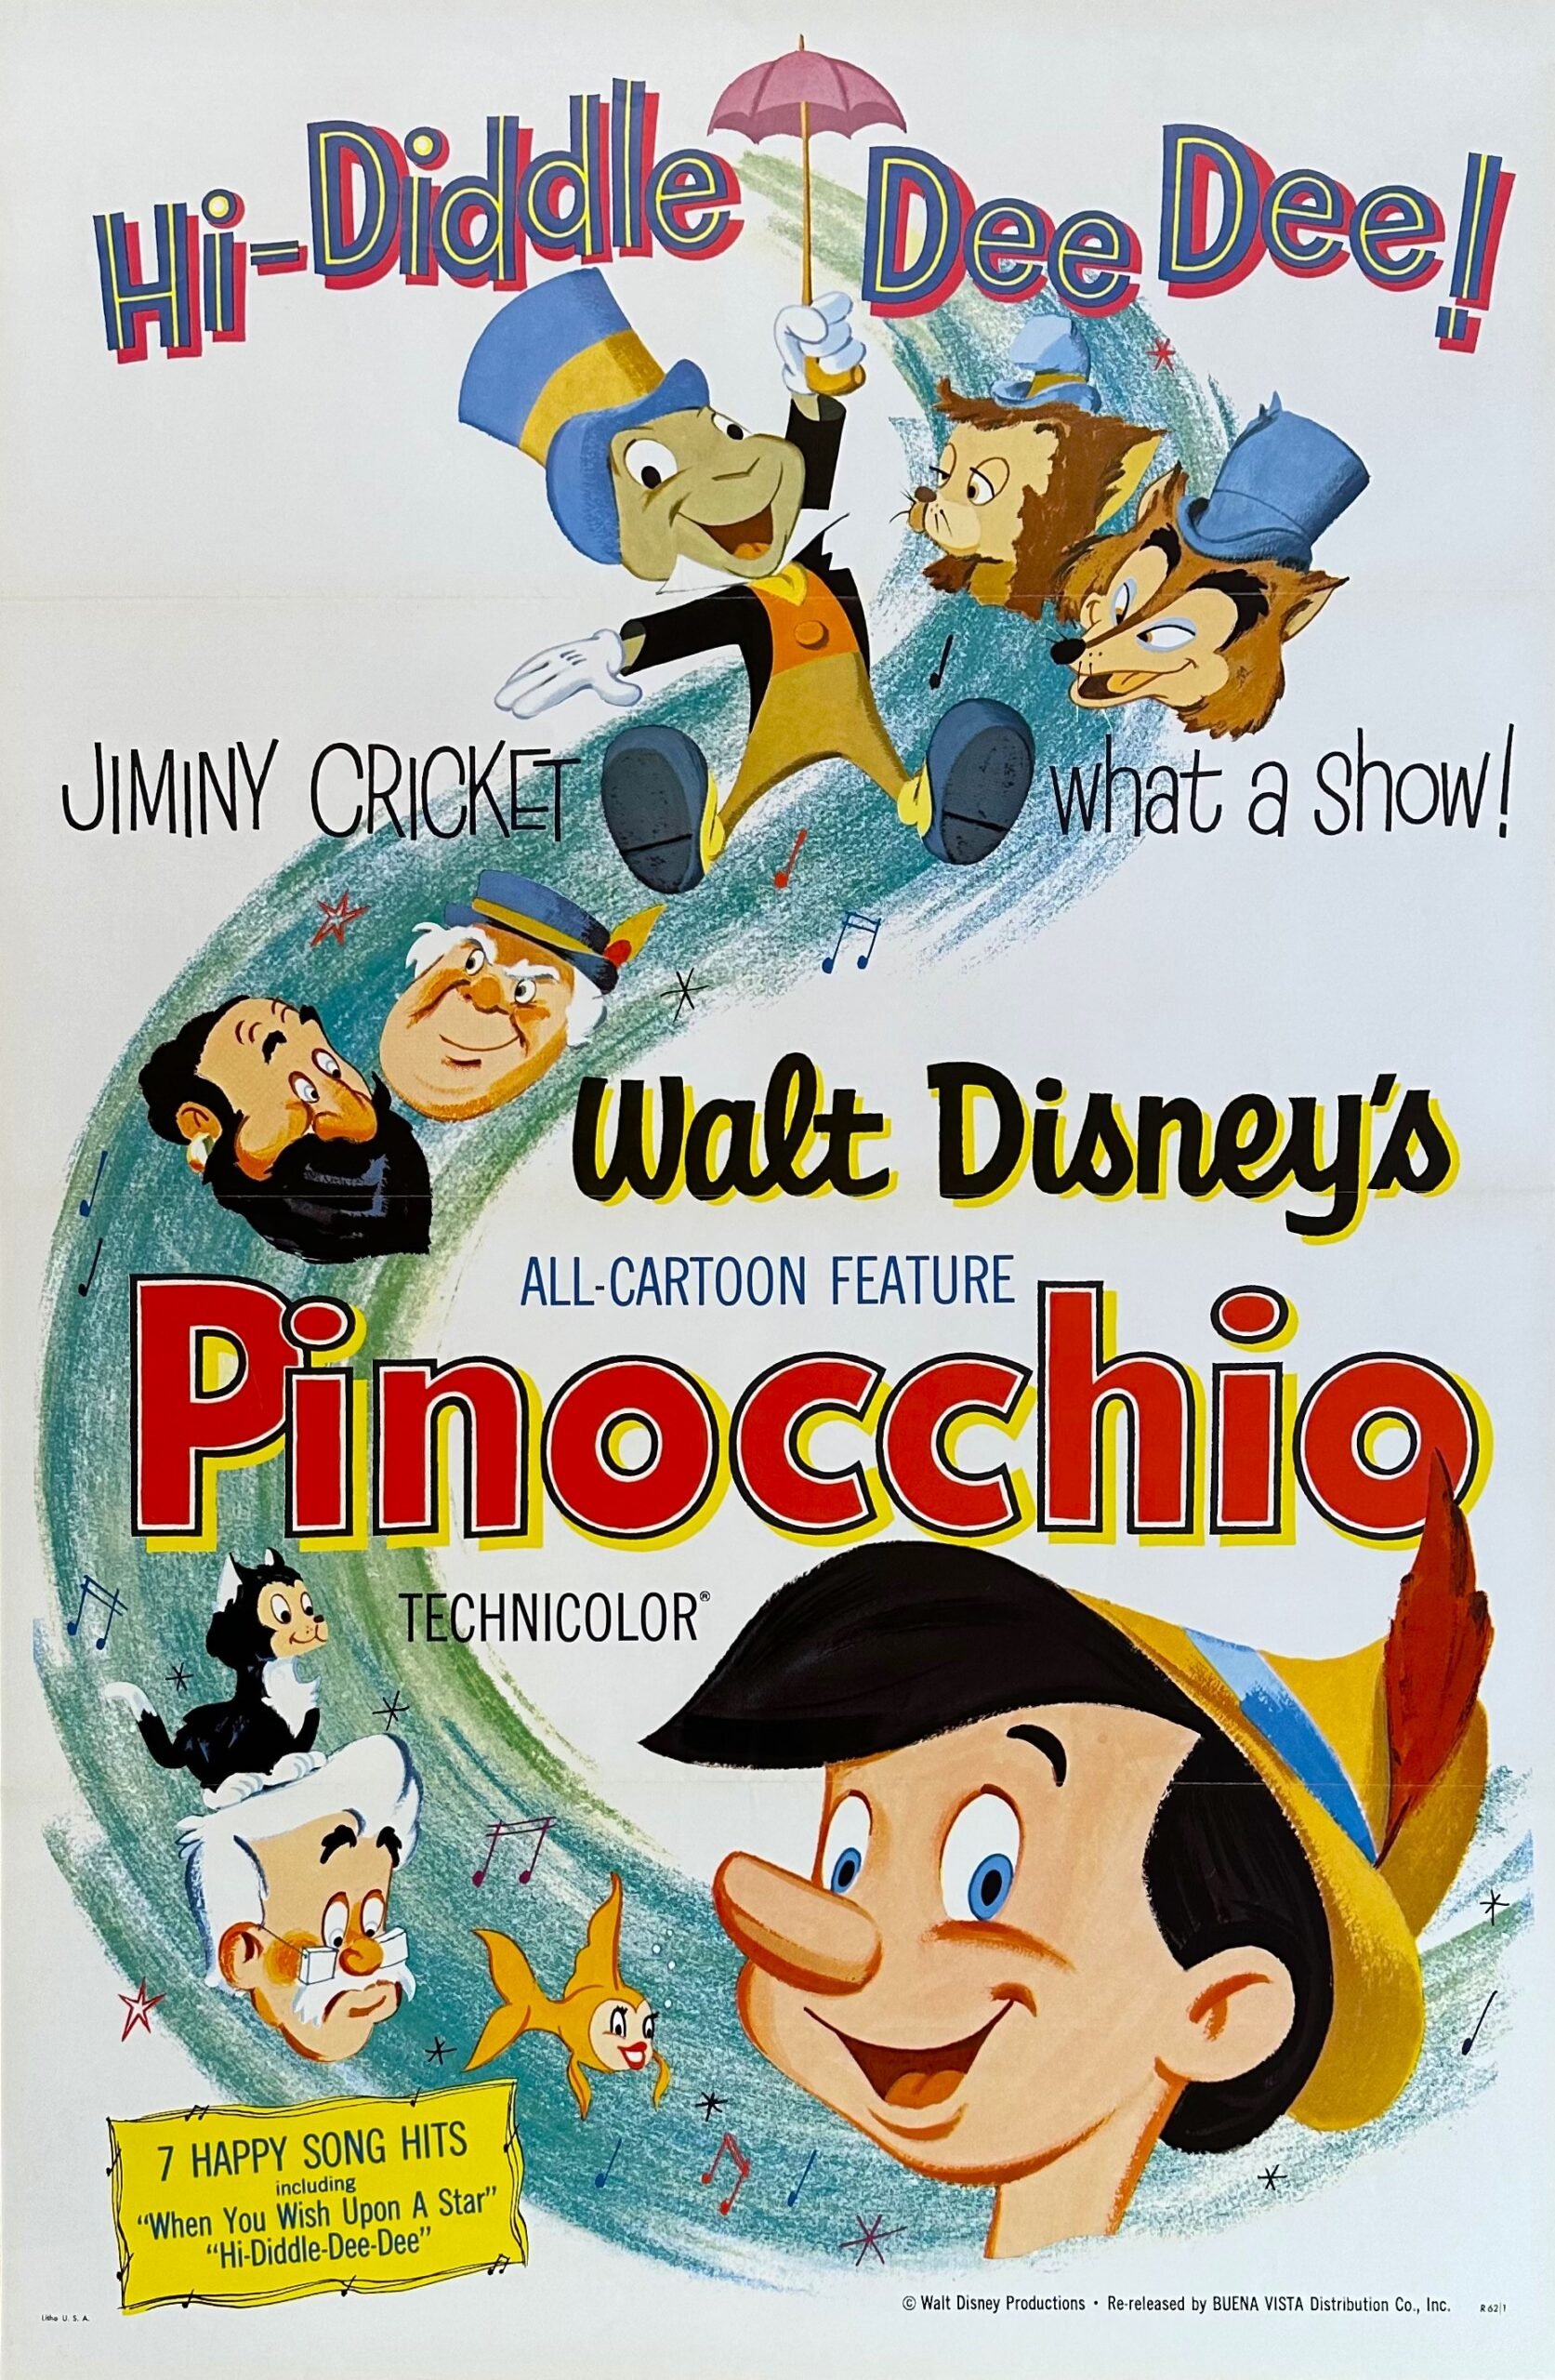 Vintage original US cinema movie poster for Disney's Pinocchio